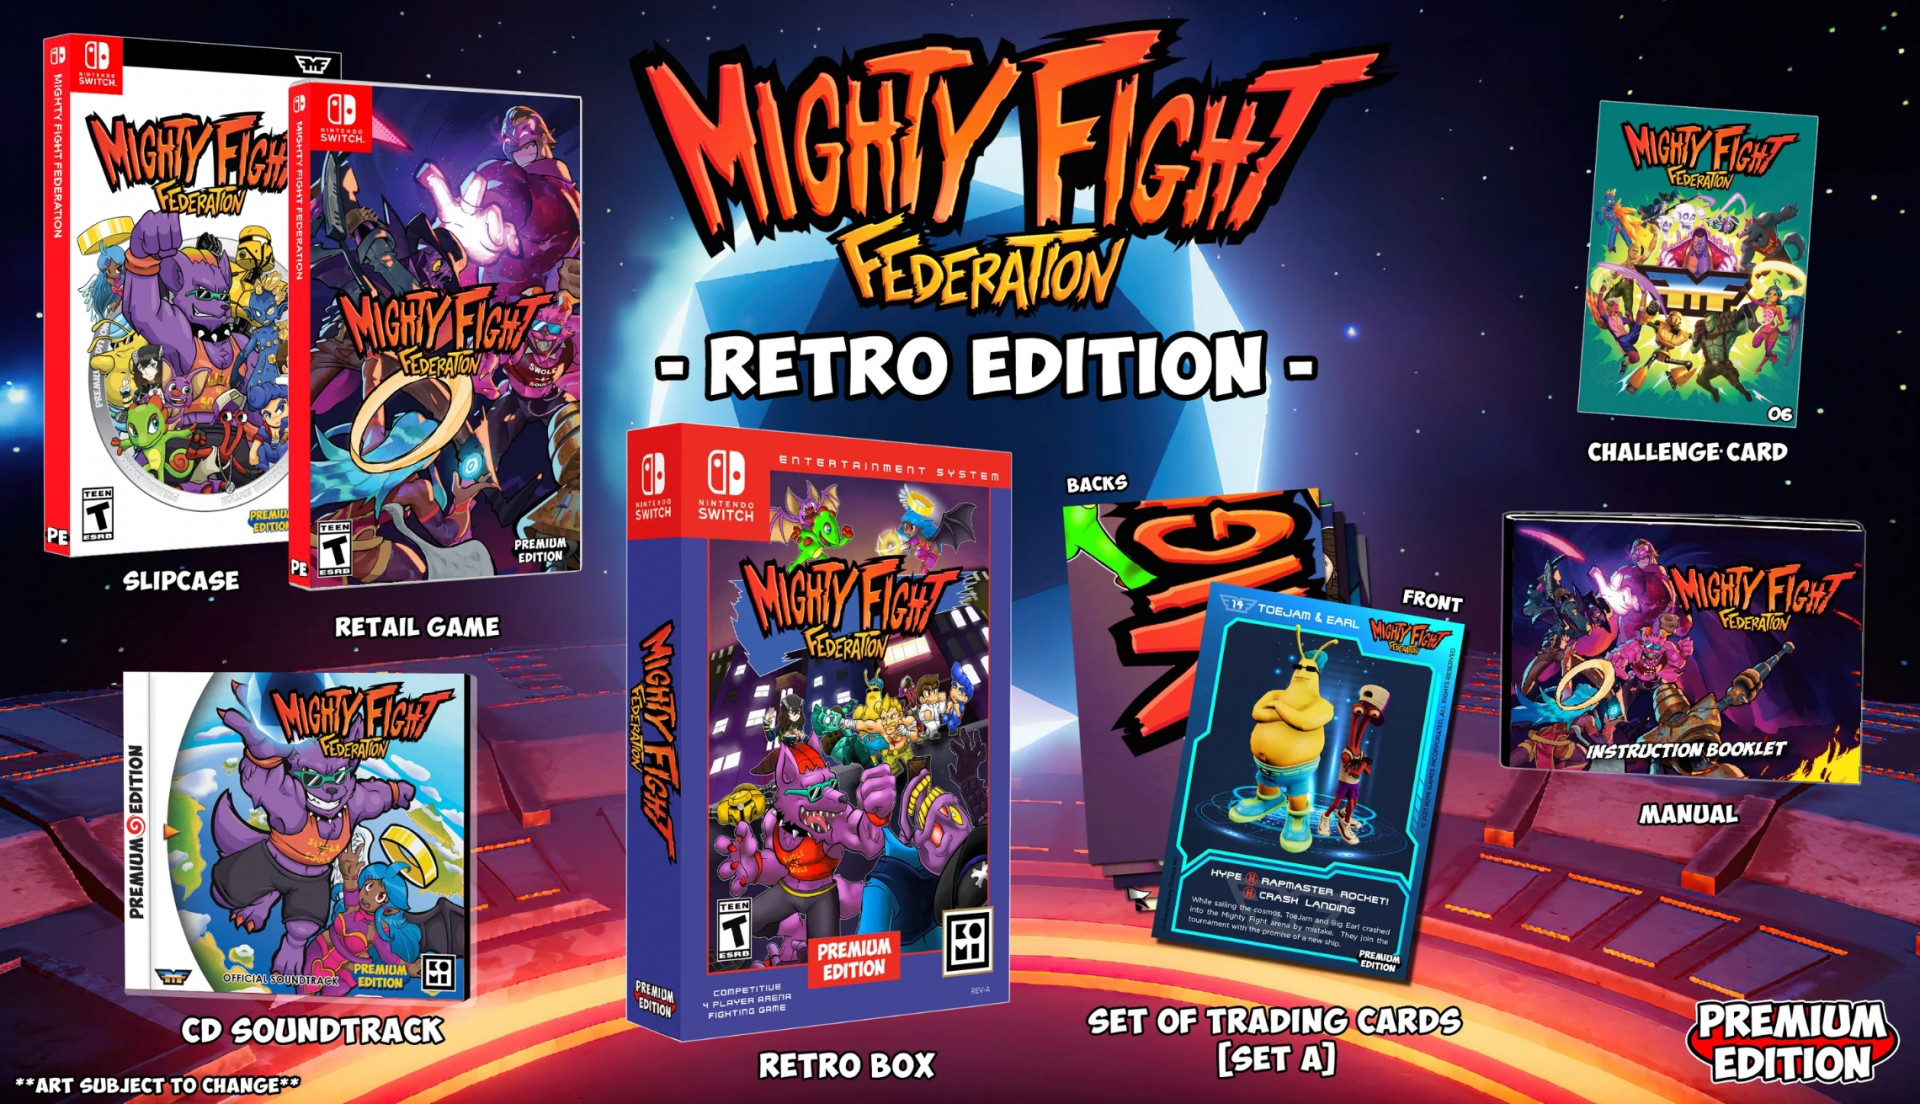 Mighty Fight Federation Retro Edition